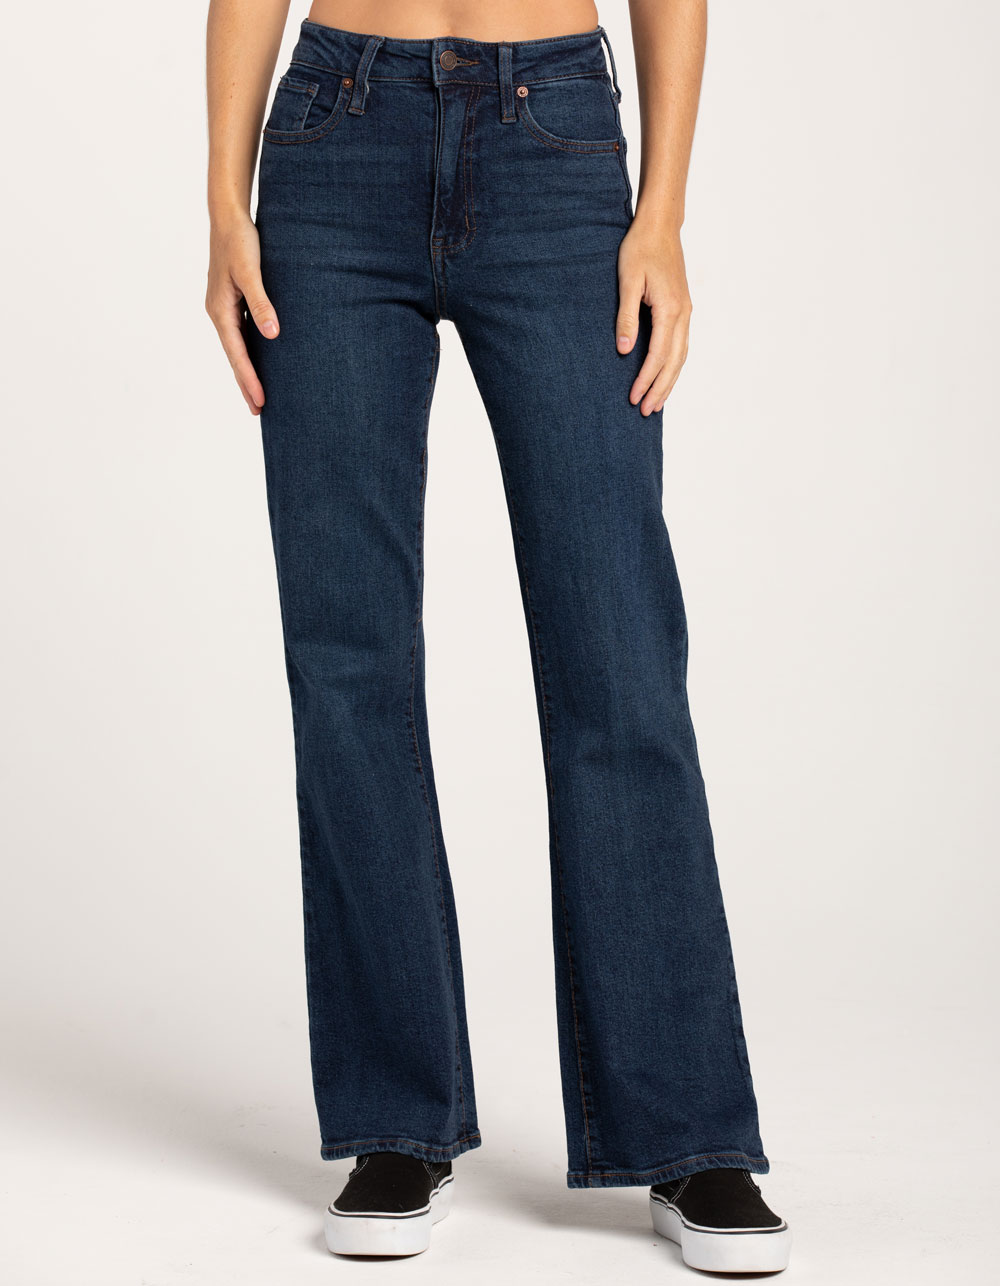 RSQ Womens High Rise Flare Jeans - DARK WASH